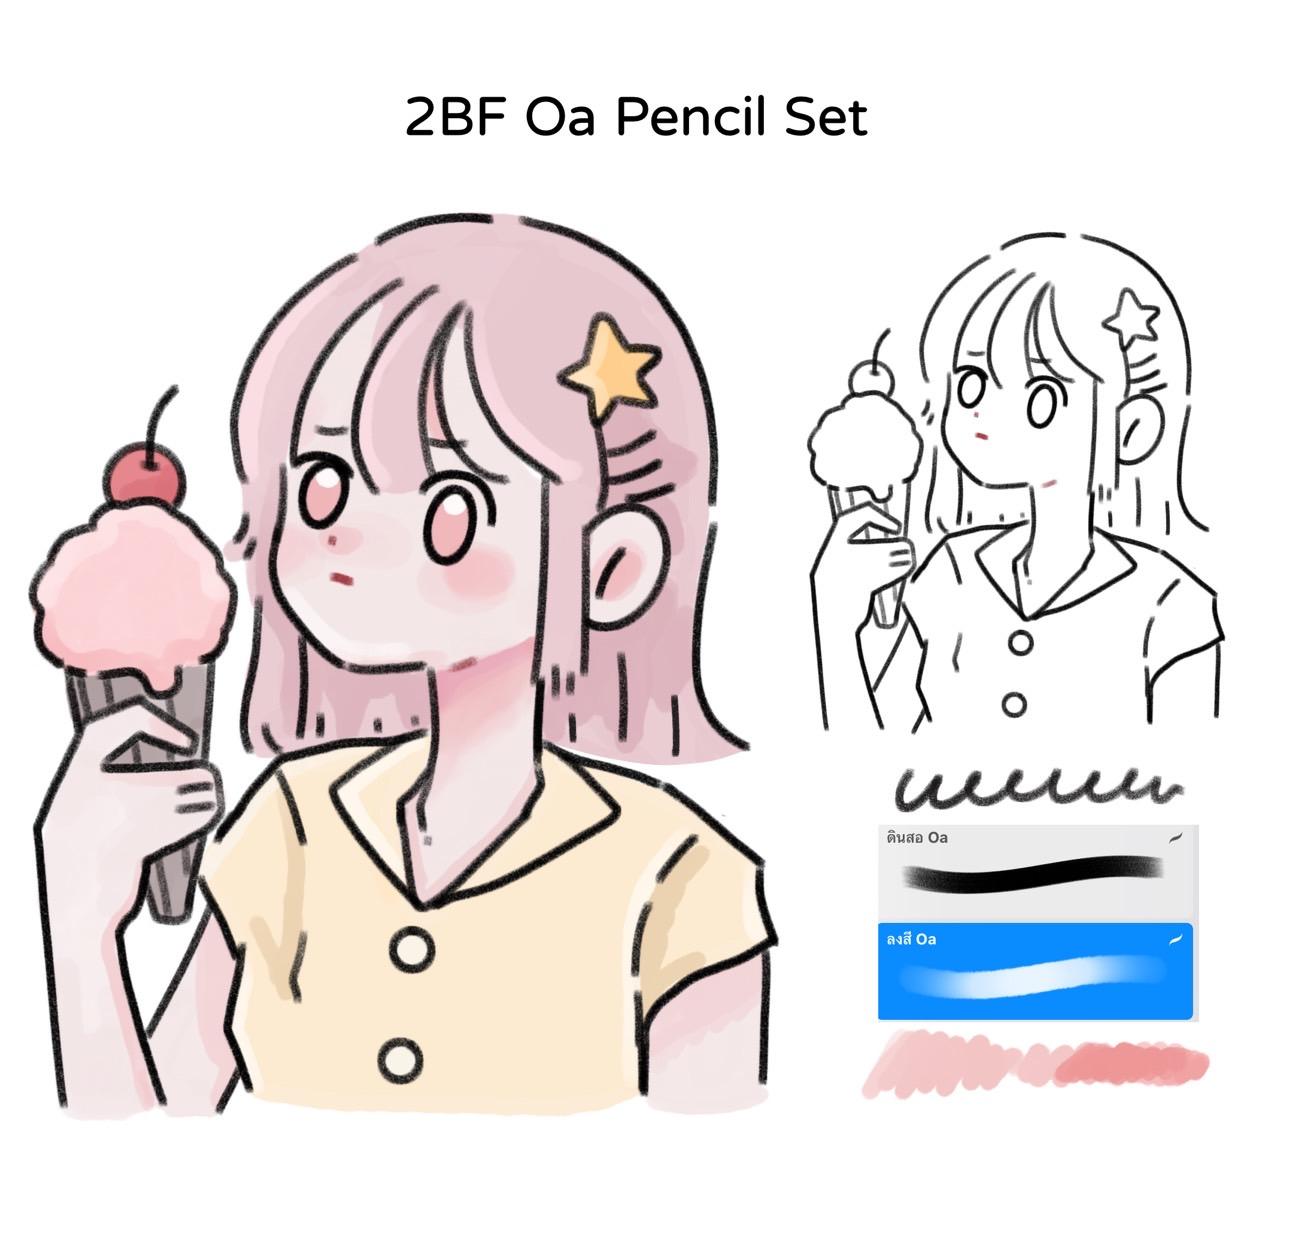 2BF Oa Pencil Set